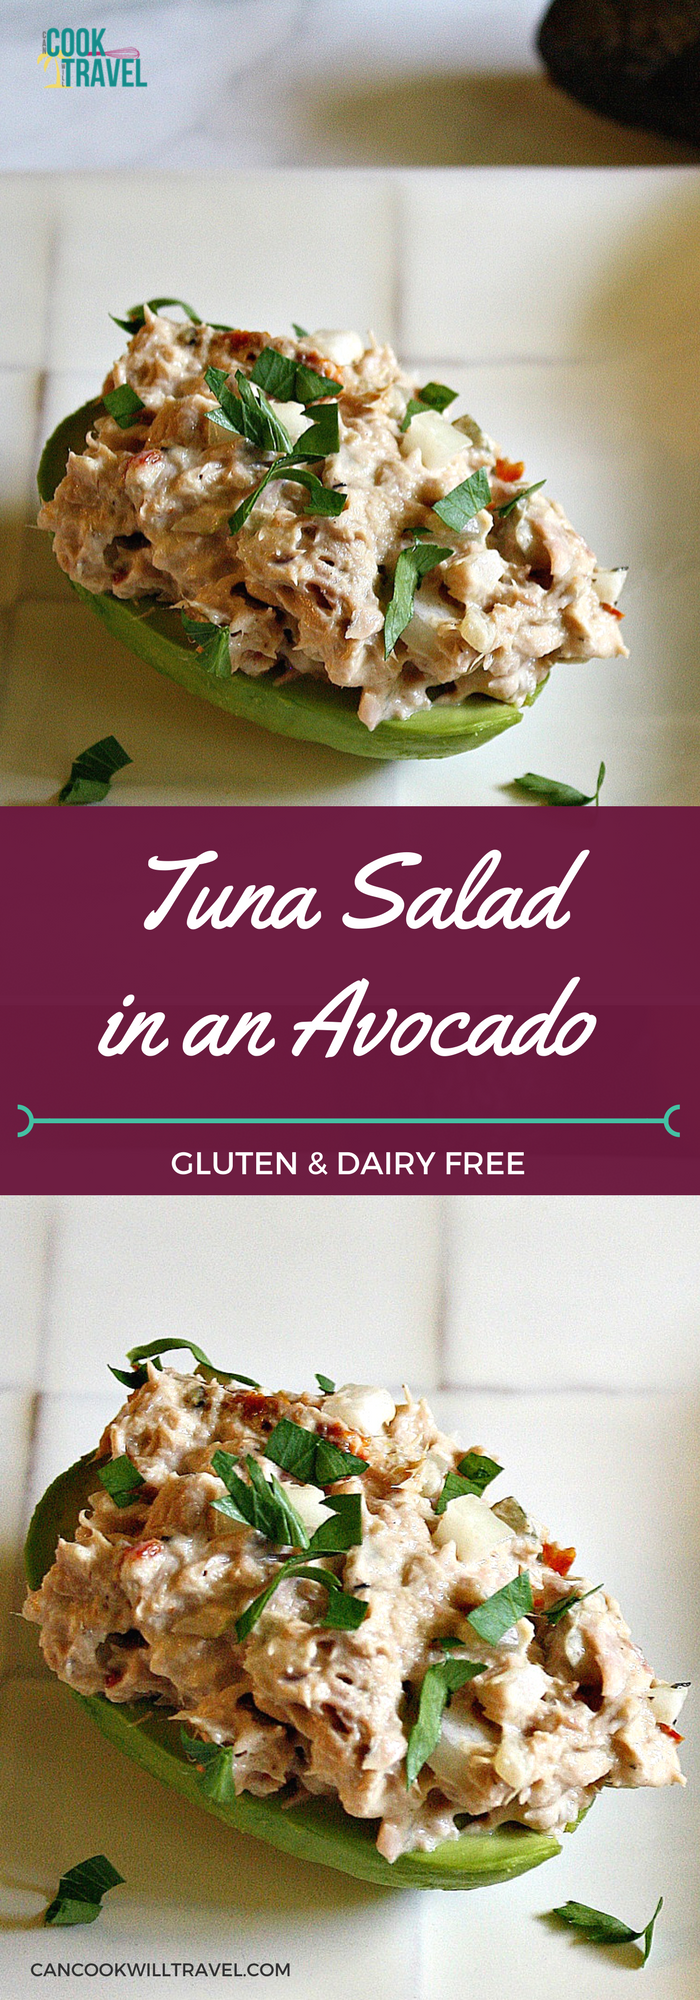 Tuna Salad in Avocado_Collage1